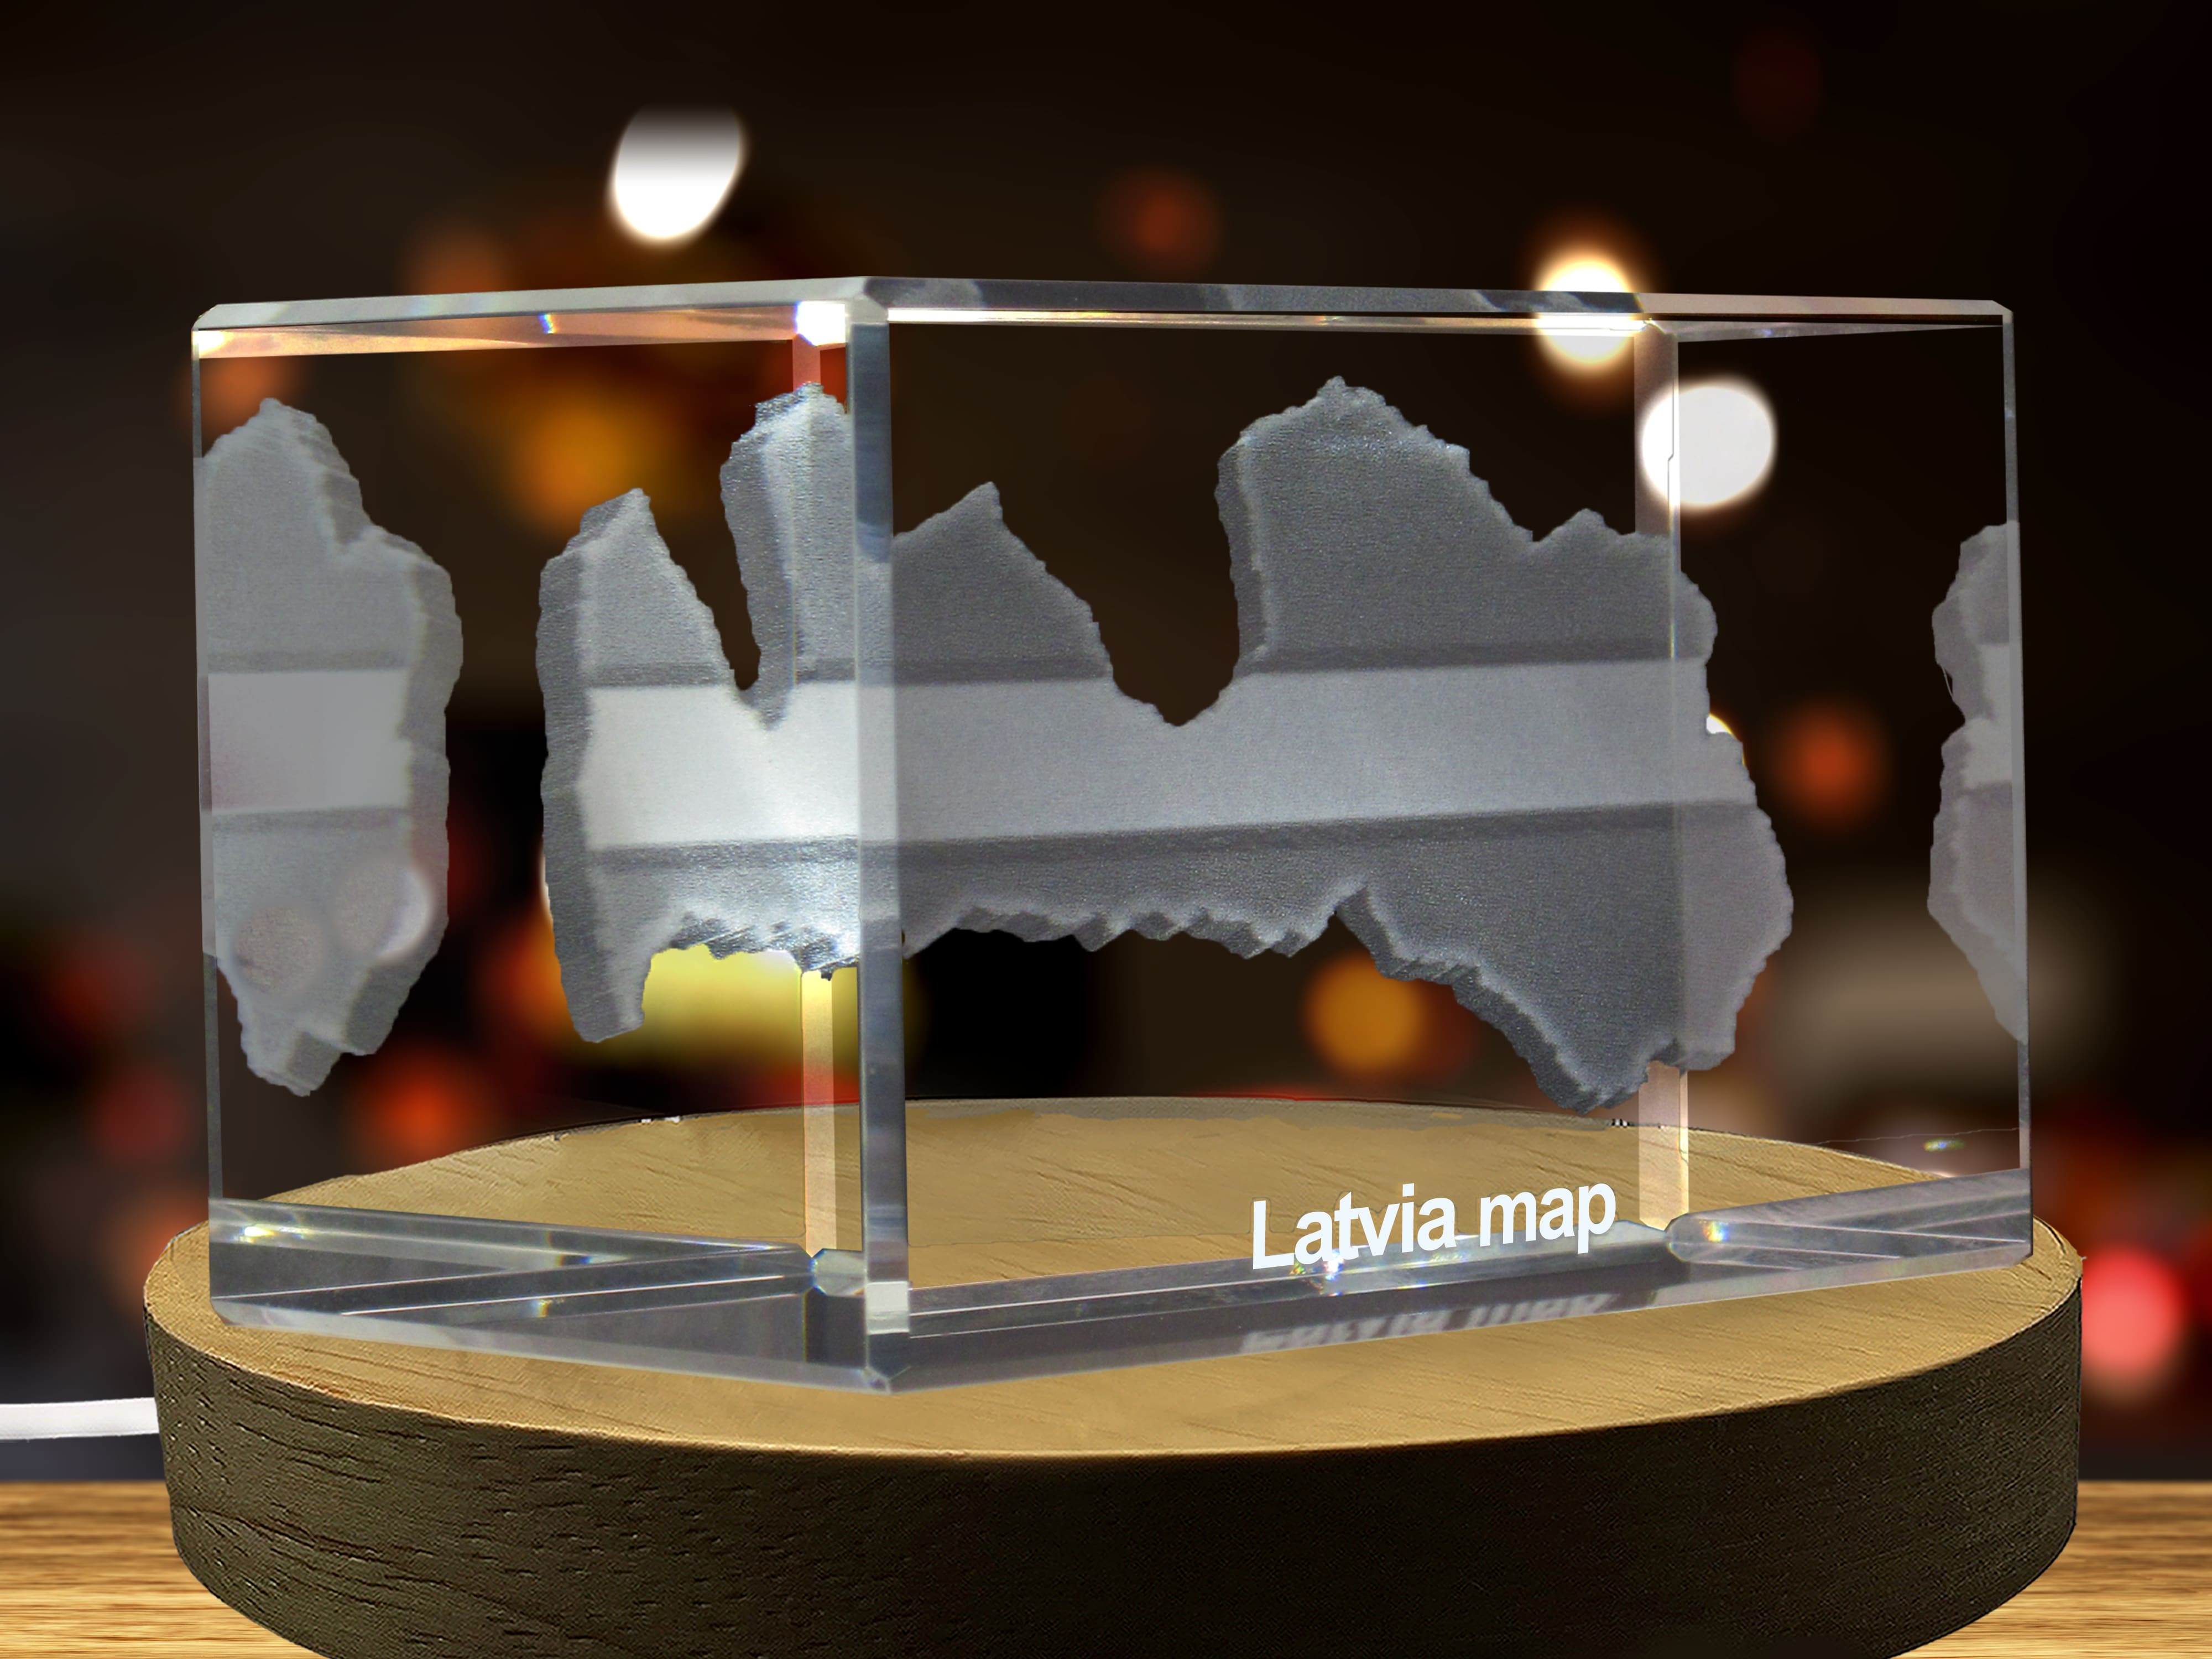 Latvia 3D Engraved Crystal 3D Engraved Crystal Keepsake/Gift/Decor/Collectible/Souvenir A&B Crystal Collection